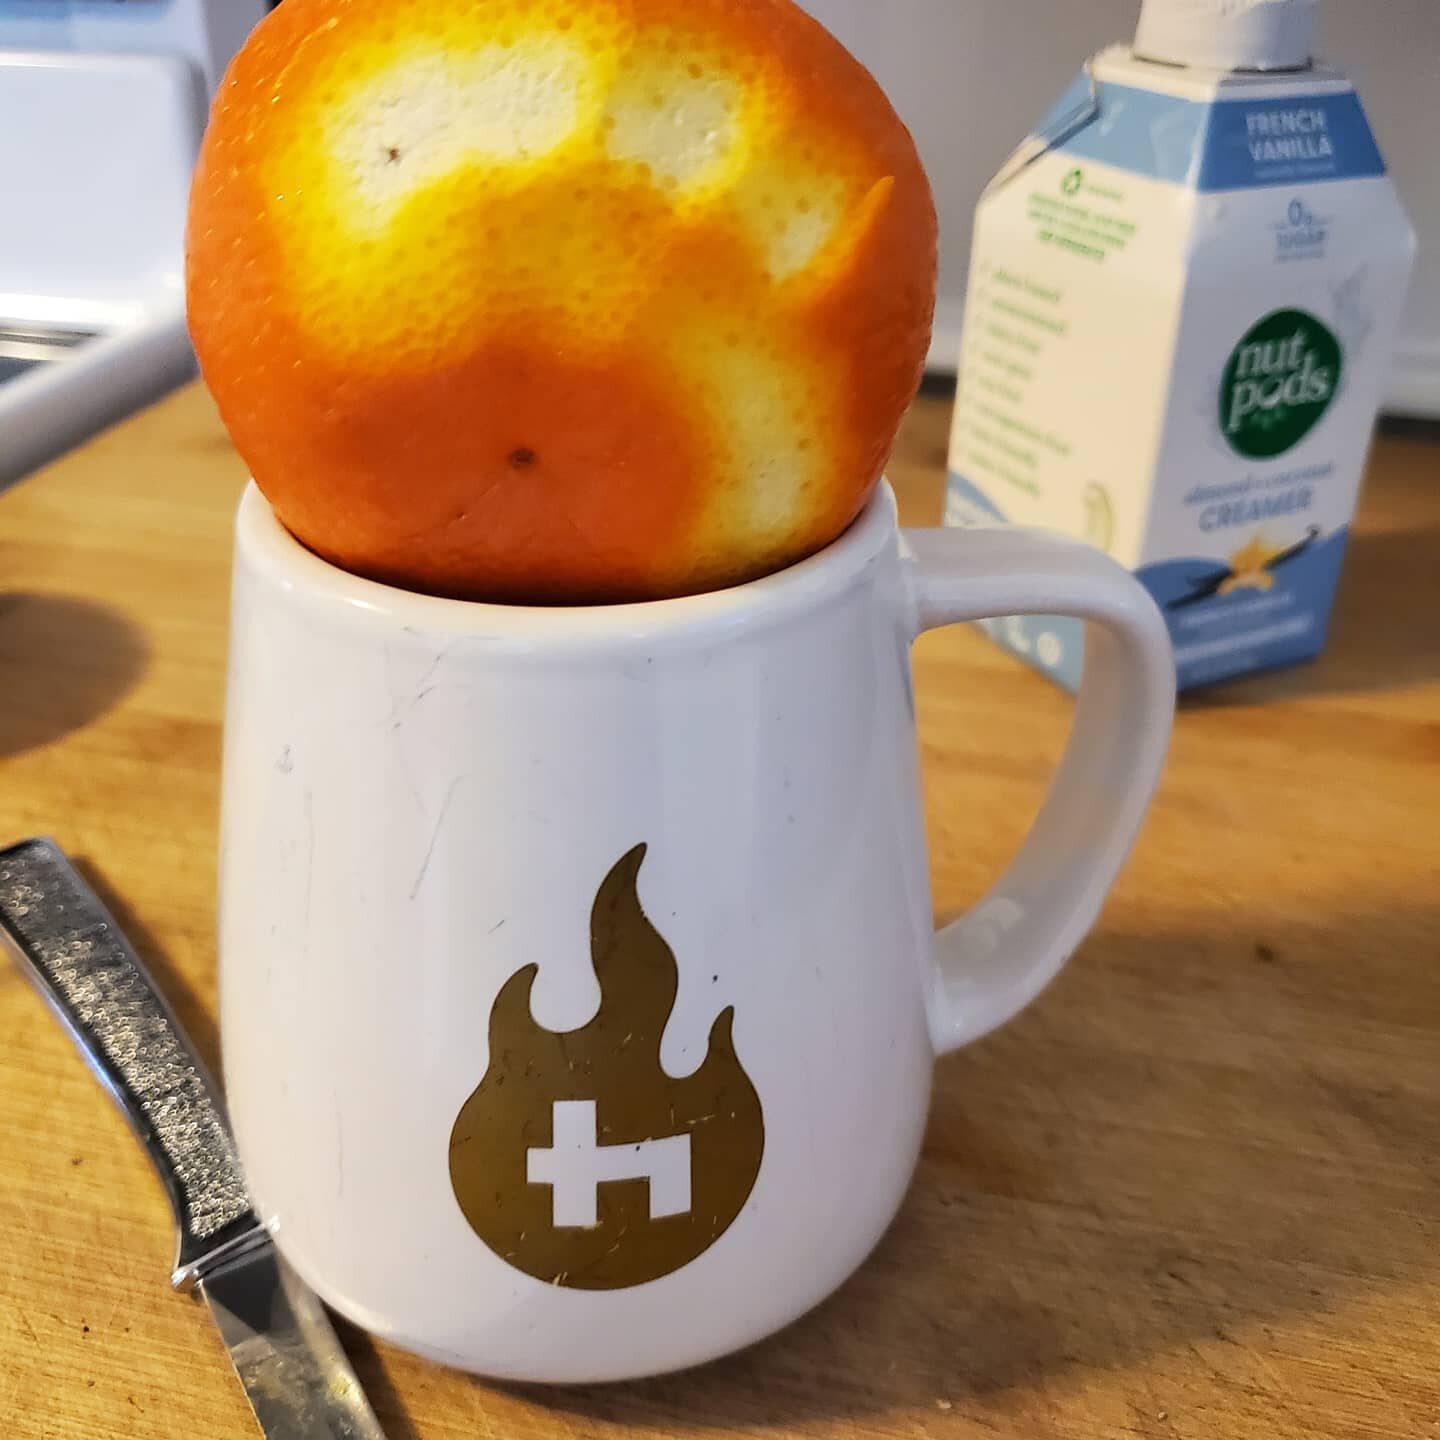 Orange peel in my coffee today made me happy.